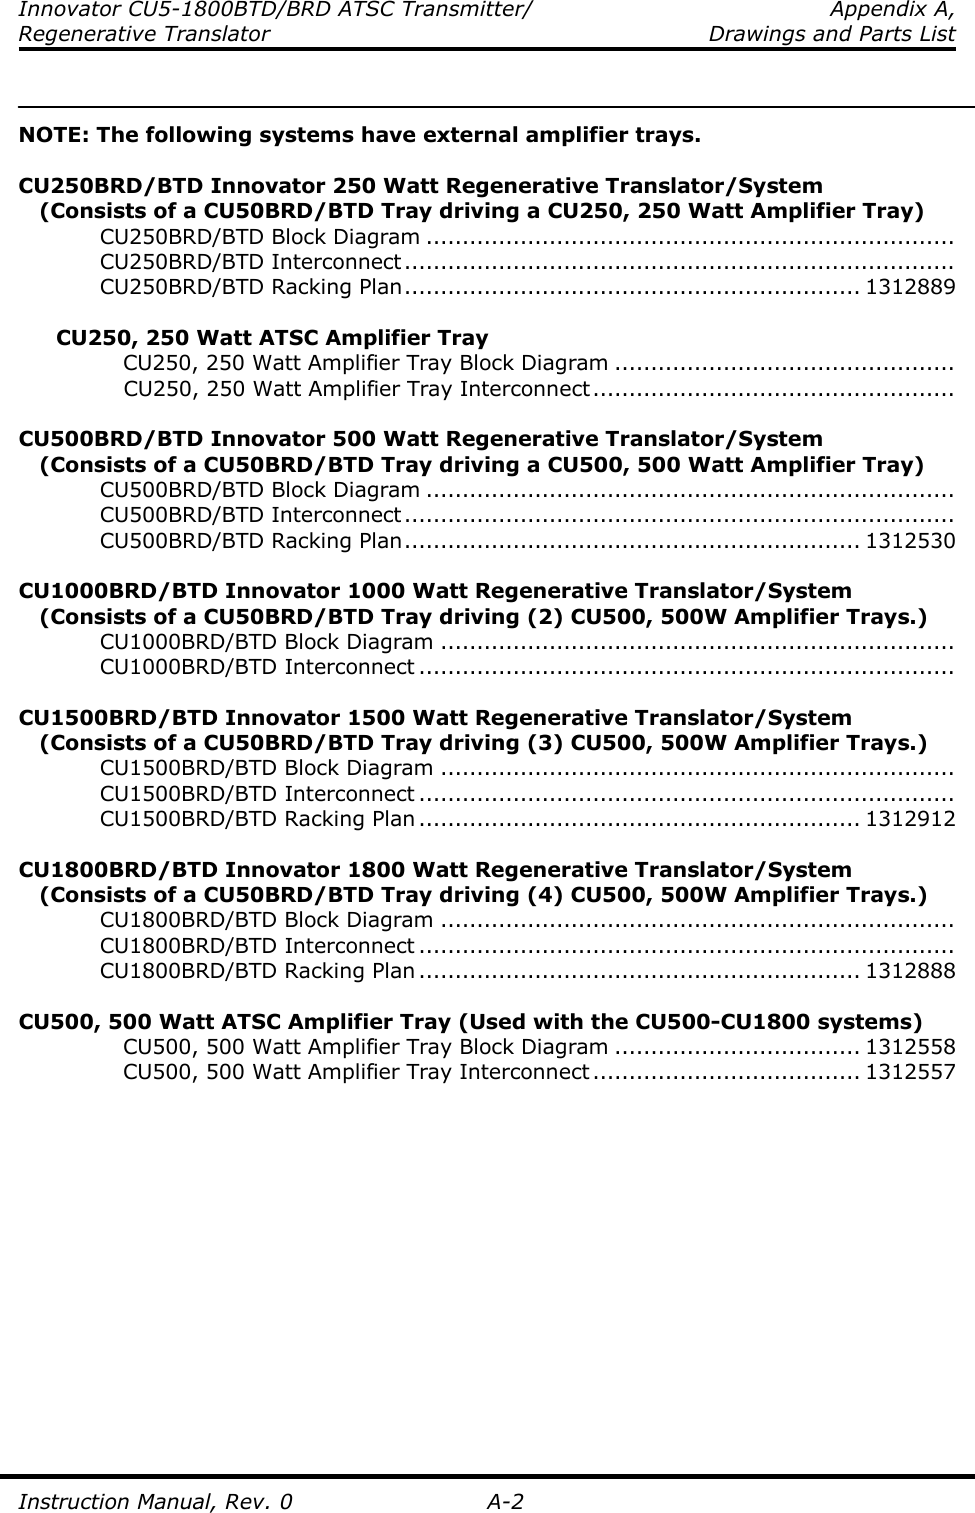 Innovator CU5-1800BTD/BRD ATSC Transmitter/  Appendix A, Regenerative Translator    Drawings and Parts List  Instruction Manual, Rev. 0  A-2   NOTE: The following systems have external amplifier trays.  CU250BRD/BTD Innovator 250 Watt Regenerative Translator/System    (Consists of a CU50BRD/BTD Tray driving a CU250, 250 Watt Amplifier Tray)     CU250BRD/BTD Block Diagram .........................................................................     CU250BRD/BTD Interconnect............................................................................     CU250BRD/BTD Racking Plan............................................................... 1312889        CU250, 250 Watt ATSC Amplifier Tray       CU250, 250 Watt Amplifier Tray Block Diagram ...............................................       CU250, 250 Watt Amplifier Tray Interconnect..................................................  CU500BRD/BTD Innovator 500 Watt Regenerative Translator/System    (Consists of a CU50BRD/BTD Tray driving a CU500, 500 Watt Amplifier Tray)     CU500BRD/BTD Block Diagram .........................................................................     CU500BRD/BTD Interconnect............................................................................     CU500BRD/BTD Racking Plan............................................................... 1312530  CU1000BRD/BTD Innovator 1000 Watt Regenerative Translator/System    (Consists of a CU50BRD/BTD Tray driving (2) CU500, 500W Amplifier Trays.)     CU1000BRD/BTD Block Diagram .......................................................................     CU1000BRD/BTD Interconnect ..........................................................................  CU1500BRD/BTD Innovator 1500 Watt Regenerative Translator/System    (Consists of a CU50BRD/BTD Tray driving (3) CU500, 500W Amplifier Trays.)     CU1500BRD/BTD Block Diagram .......................................................................     CU1500BRD/BTD Interconnect ..........................................................................     CU1500BRD/BTD Racking Plan ............................................................. 1312912  CU1800BRD/BTD Innovator 1800 Watt Regenerative Translator/System    (Consists of a CU50BRD/BTD Tray driving (4) CU500, 500W Amplifier Trays.)     CU1800BRD/BTD Block Diagram .......................................................................     CU1800BRD/BTD Interconnect ..........................................................................     CU1800BRD/BTD Racking Plan ............................................................. 1312888      CU500, 500 Watt ATSC Amplifier Tray (Used with the CU500-CU1800 systems)       CU500, 500 Watt Amplifier Tray Block Diagram .................................. 1312558       CU500, 500 Watt Amplifier Tray Interconnect..................................... 1312557         